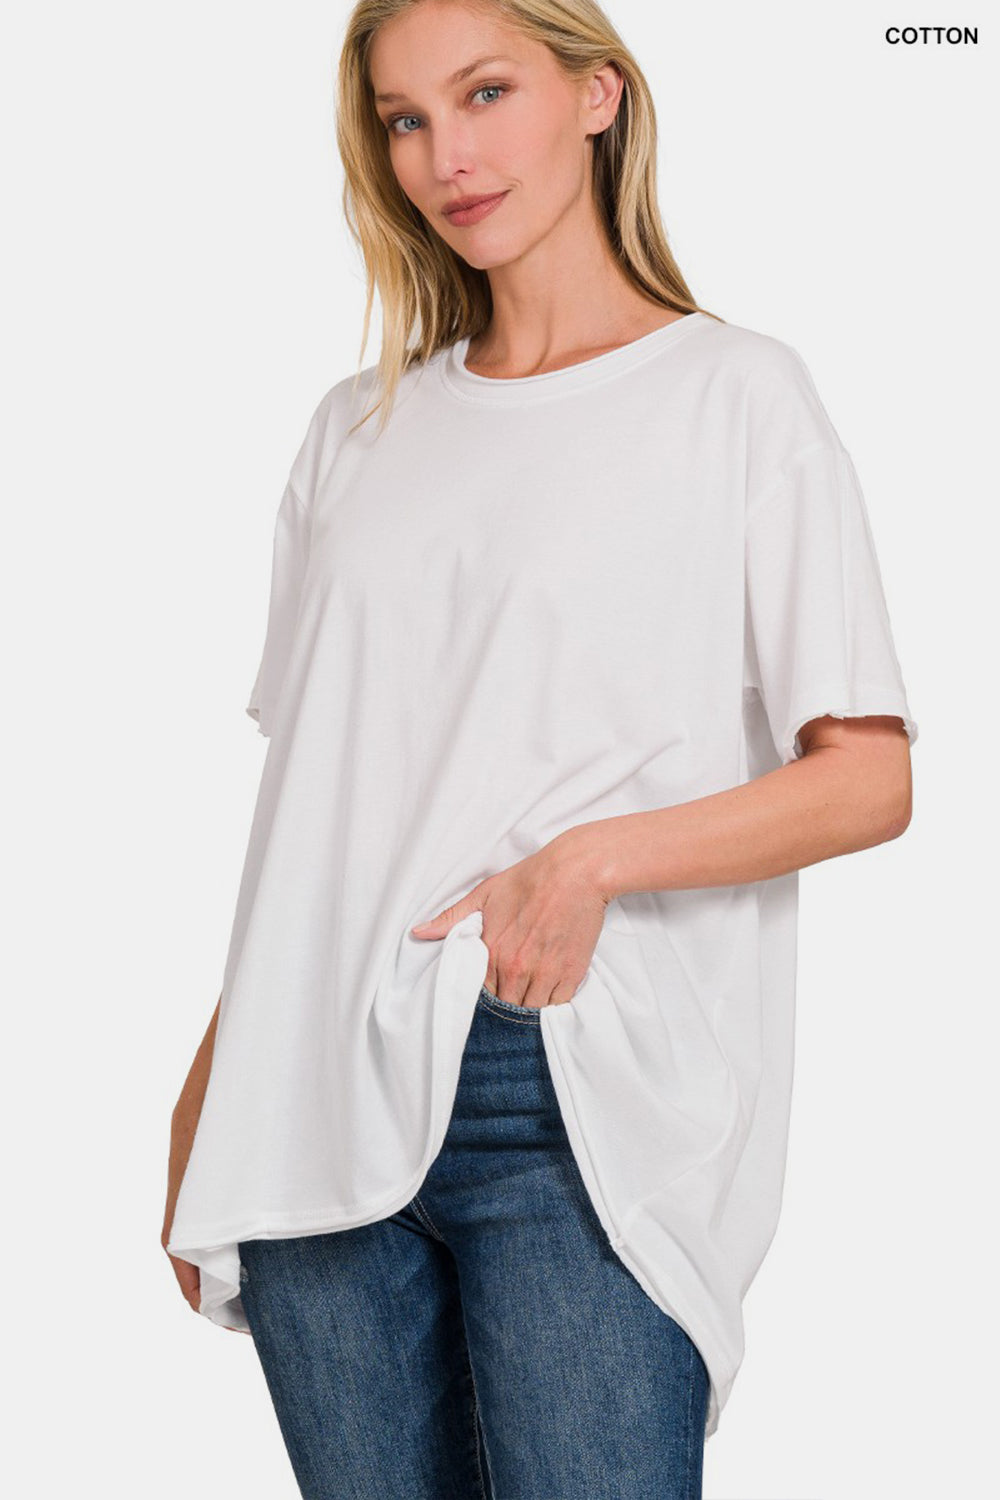 Zenana Round Neck Short Sleeve T-Shirt - White